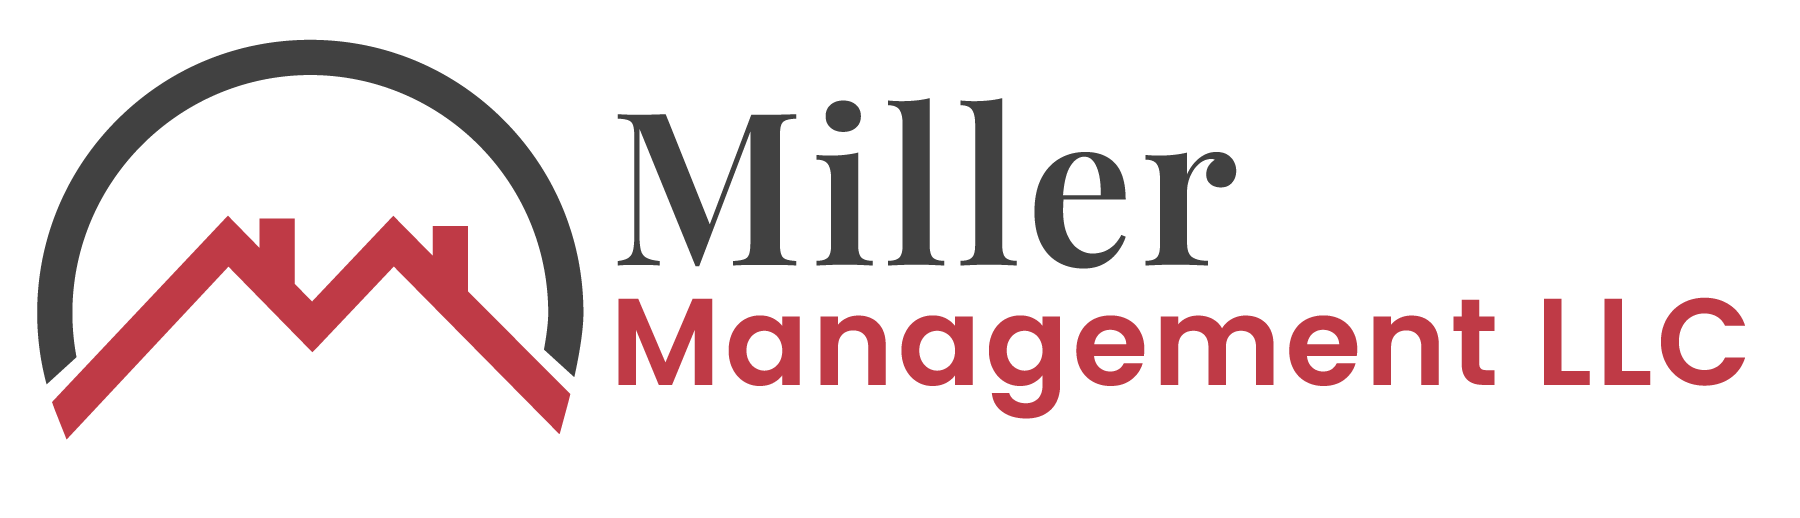 Miller Management LLC Logo - Select To Go Home